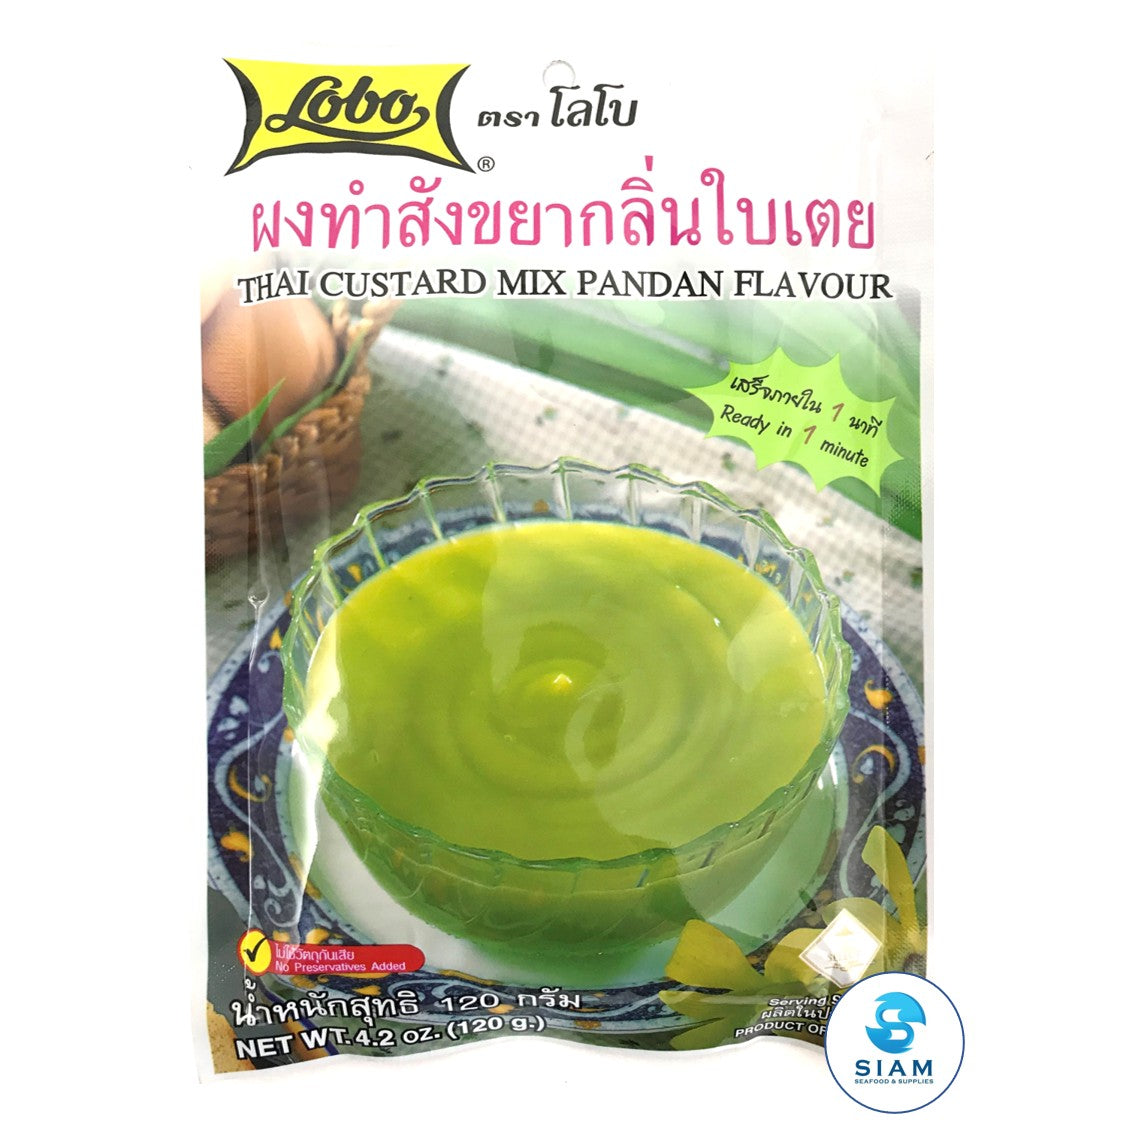 Thai Custard Mix Pandan Flavor - Lobo (4.2 oz) ผงทำสังขยากลิ่นใบเตย ตราโลโบ shippable Lobo